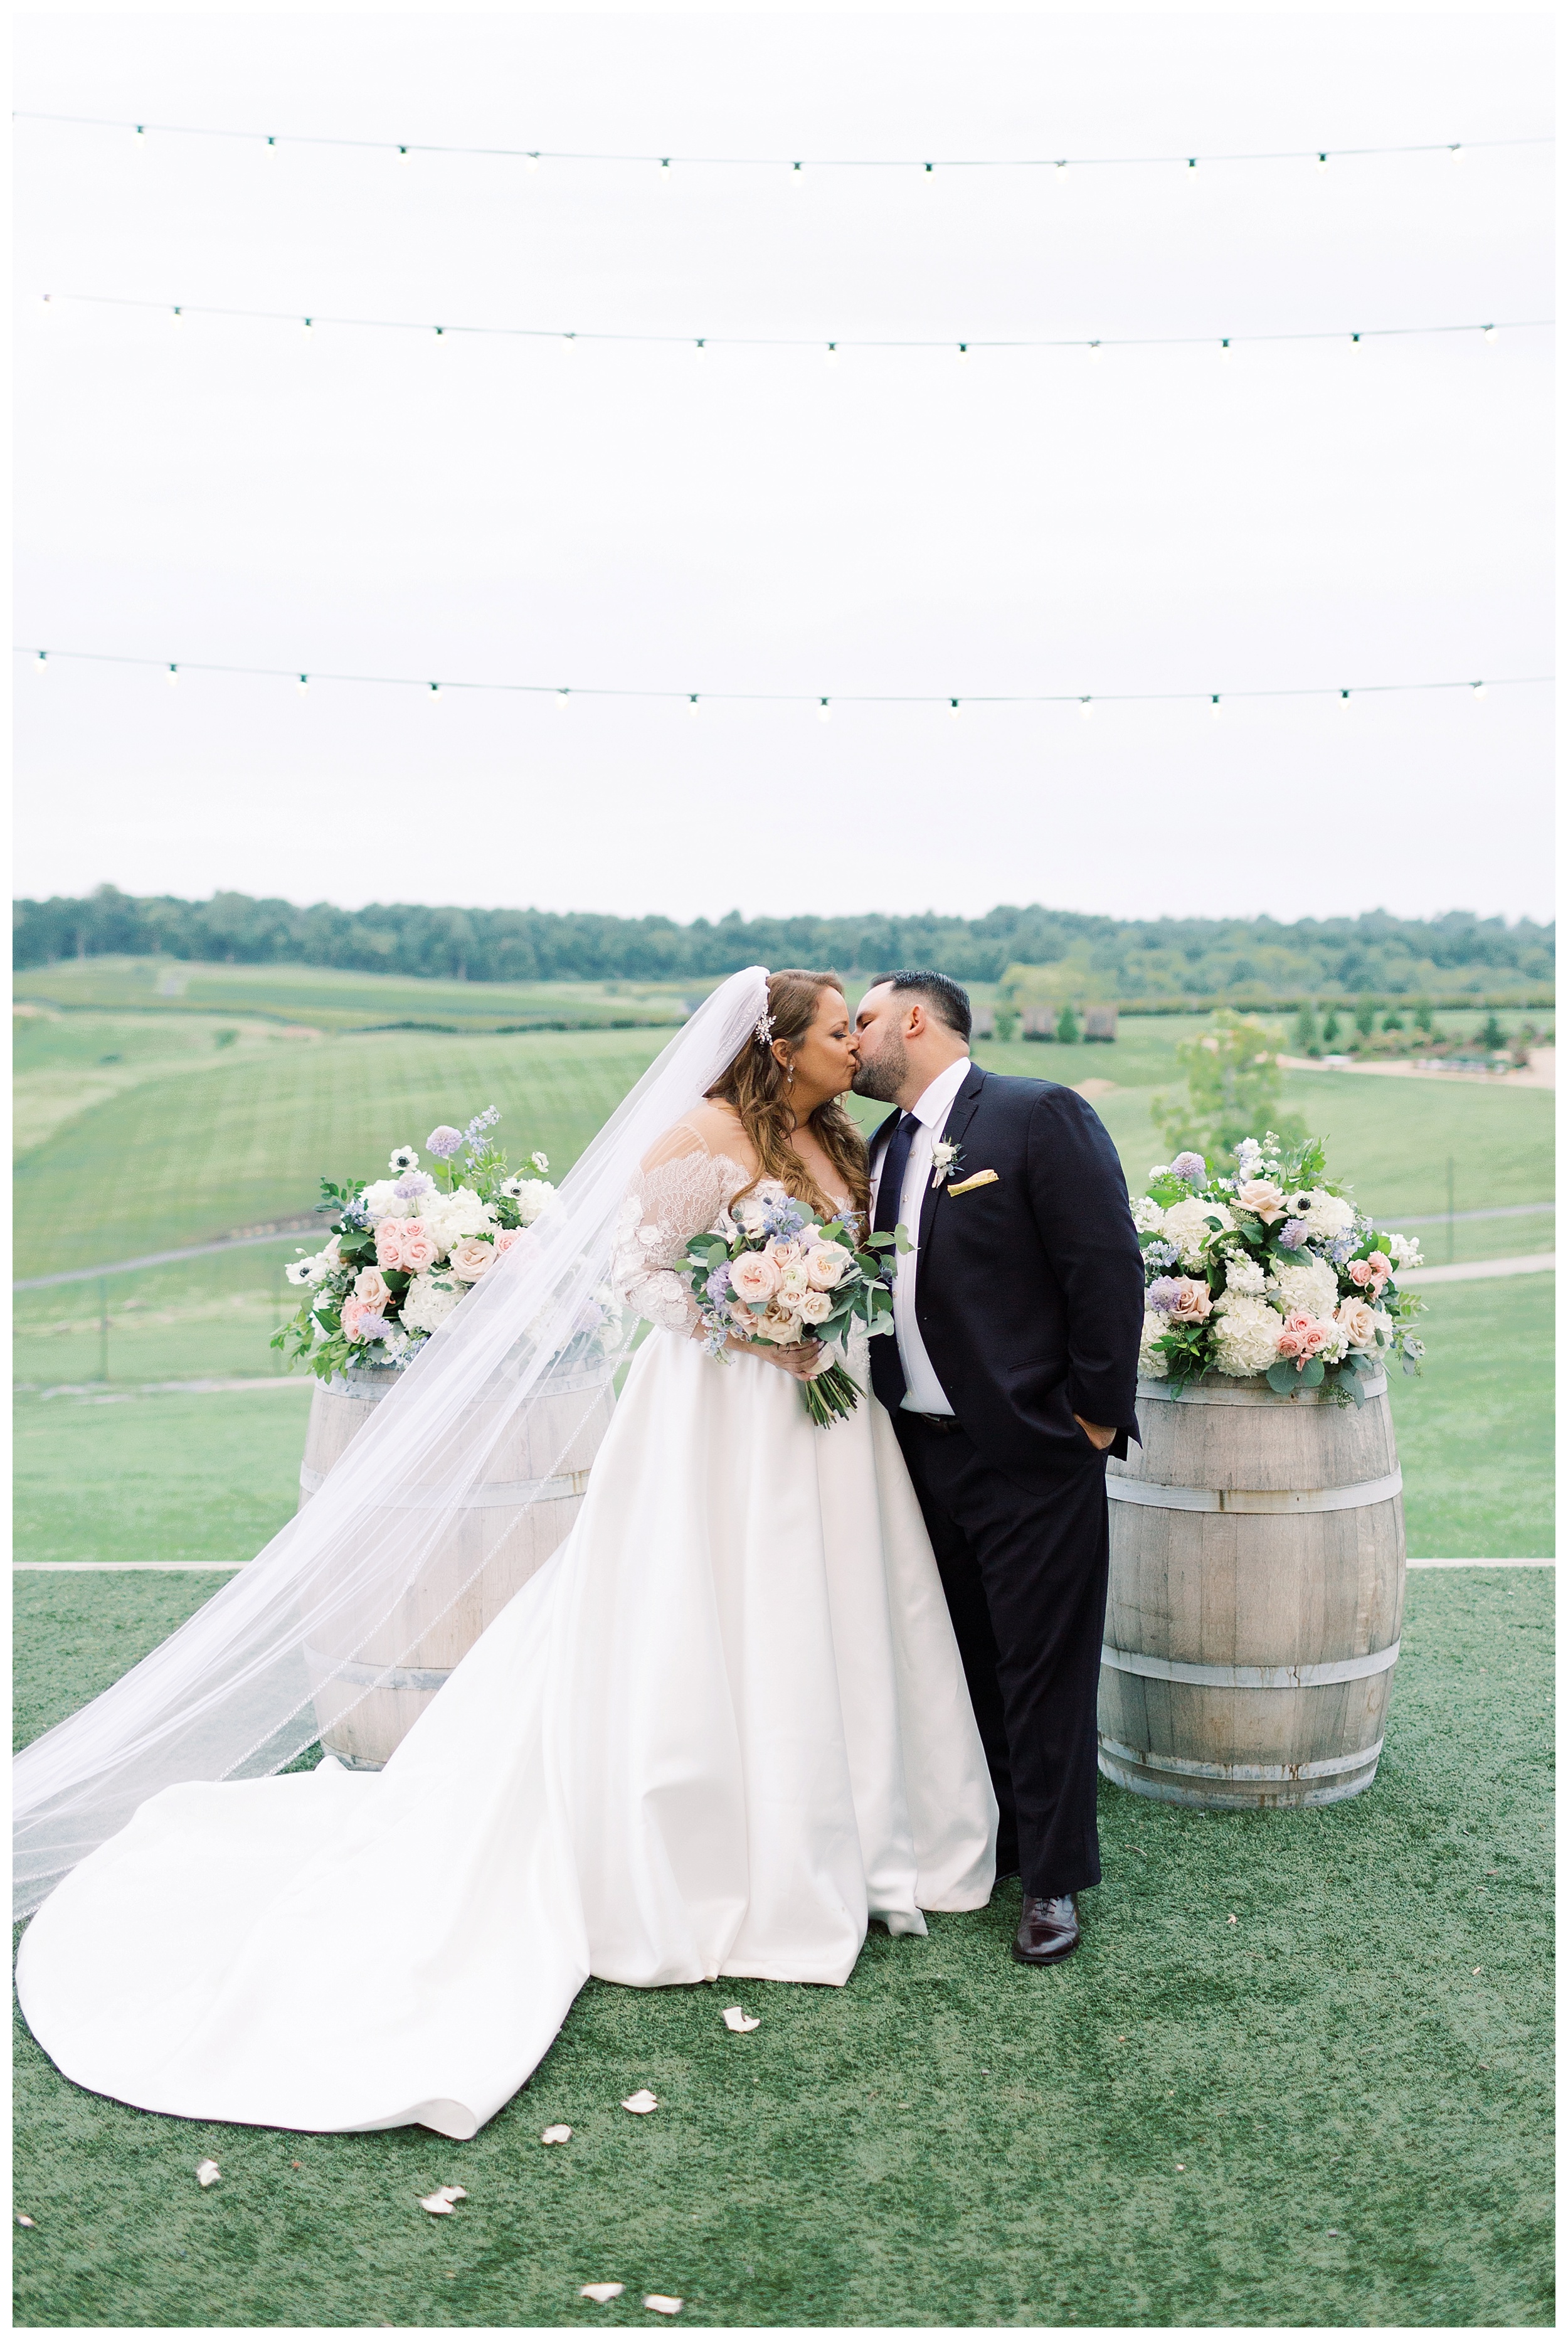 Stone Tower Winery Wedding | Northern Virginia Elopement Photos Kir Tuben Photography